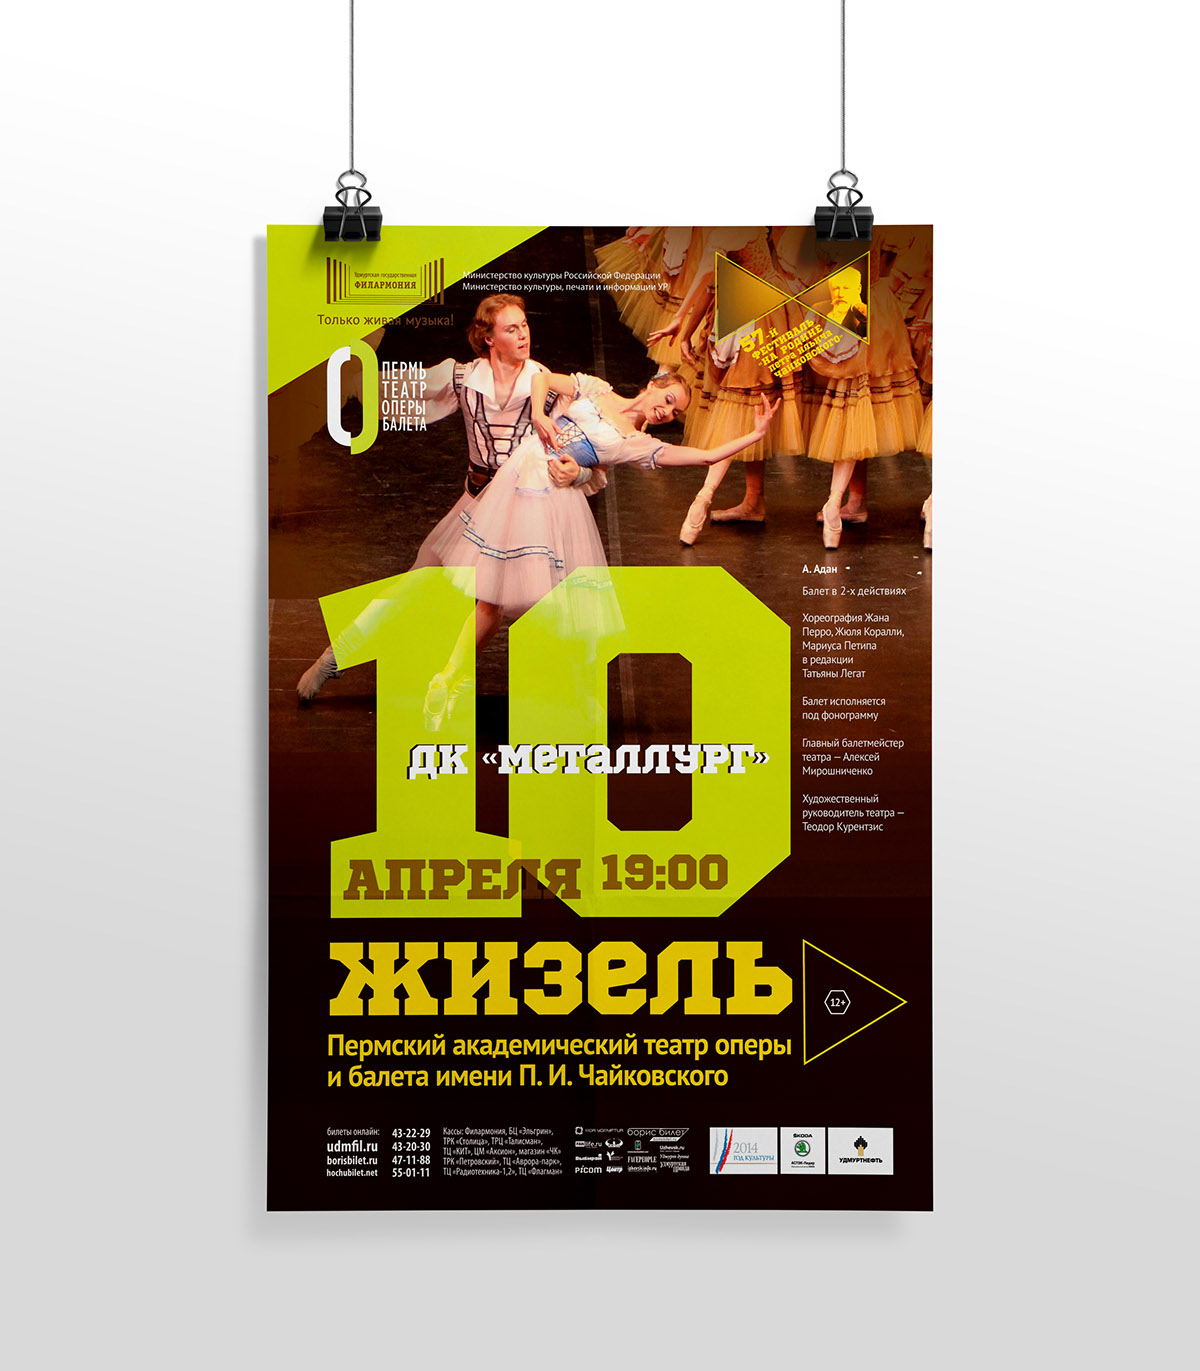 Music Festival festival philharmonic kaleidoscope Tchaikovsky bow tie poster music